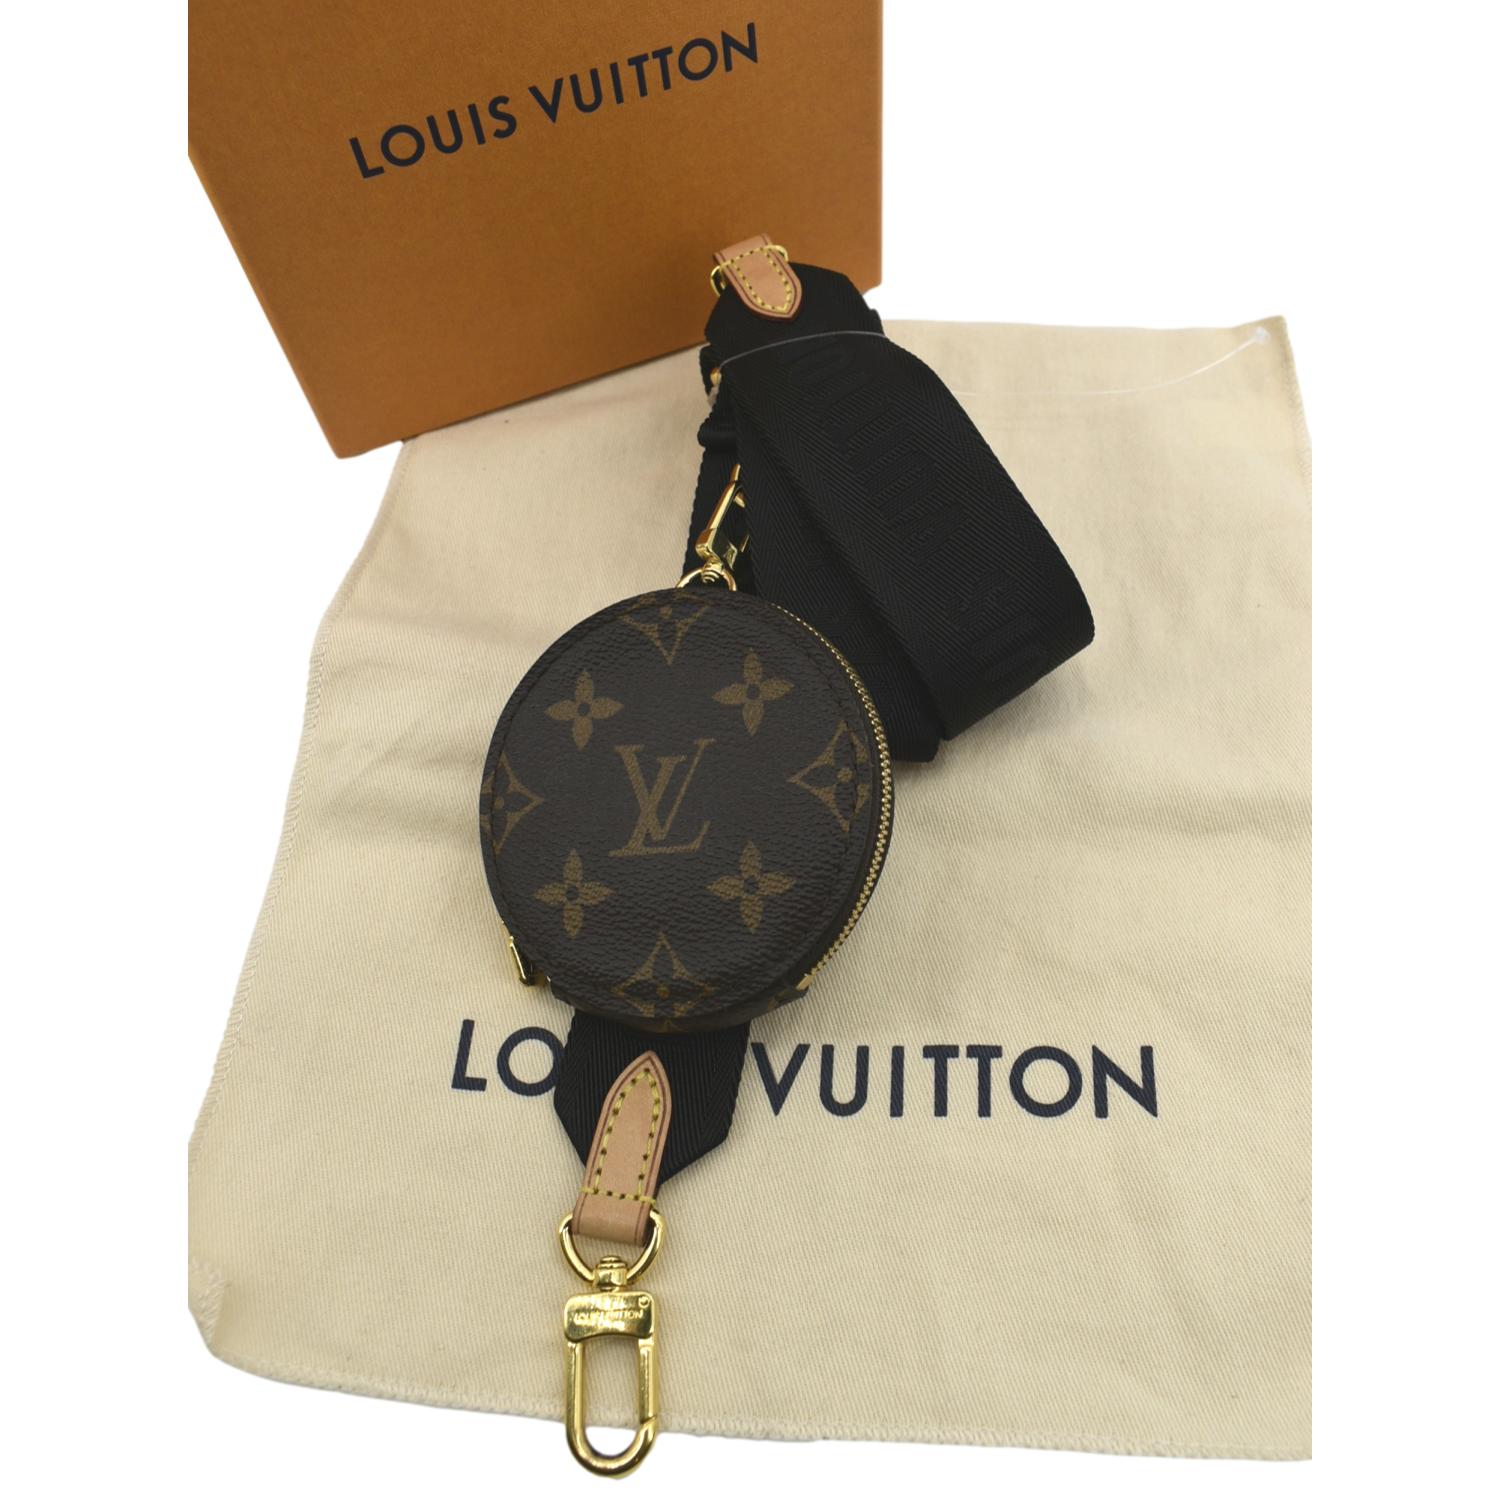 Louis Vuitton Monogram Canvas Strap with Coin Purse